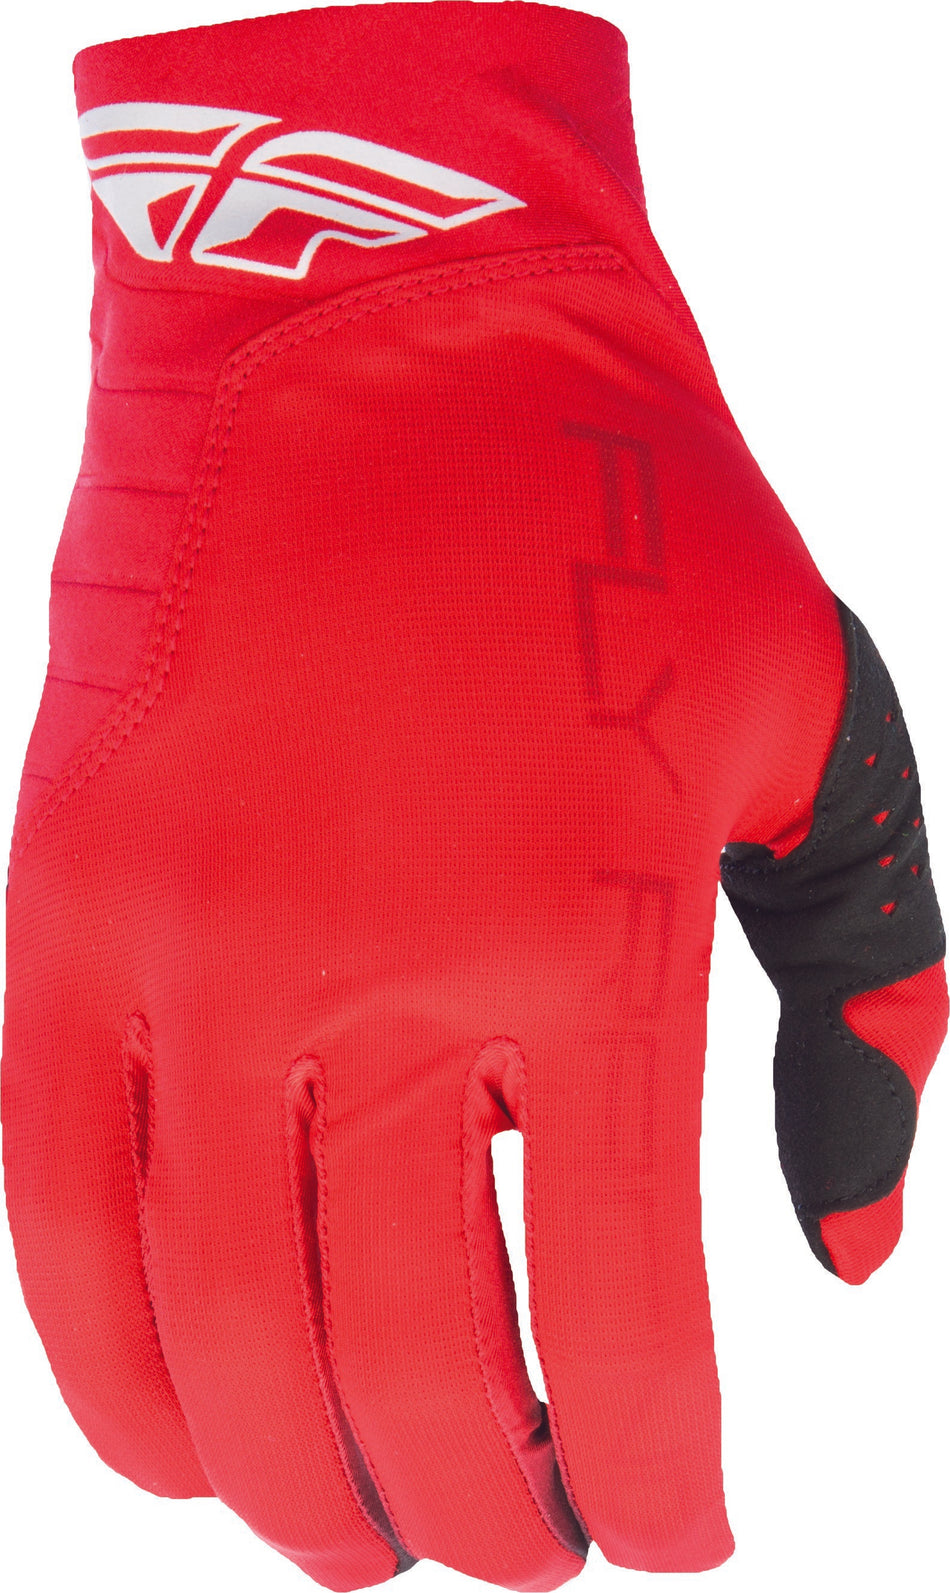 FLY RACING Pro Lite Glove Red Sz 13 3x 370-81213